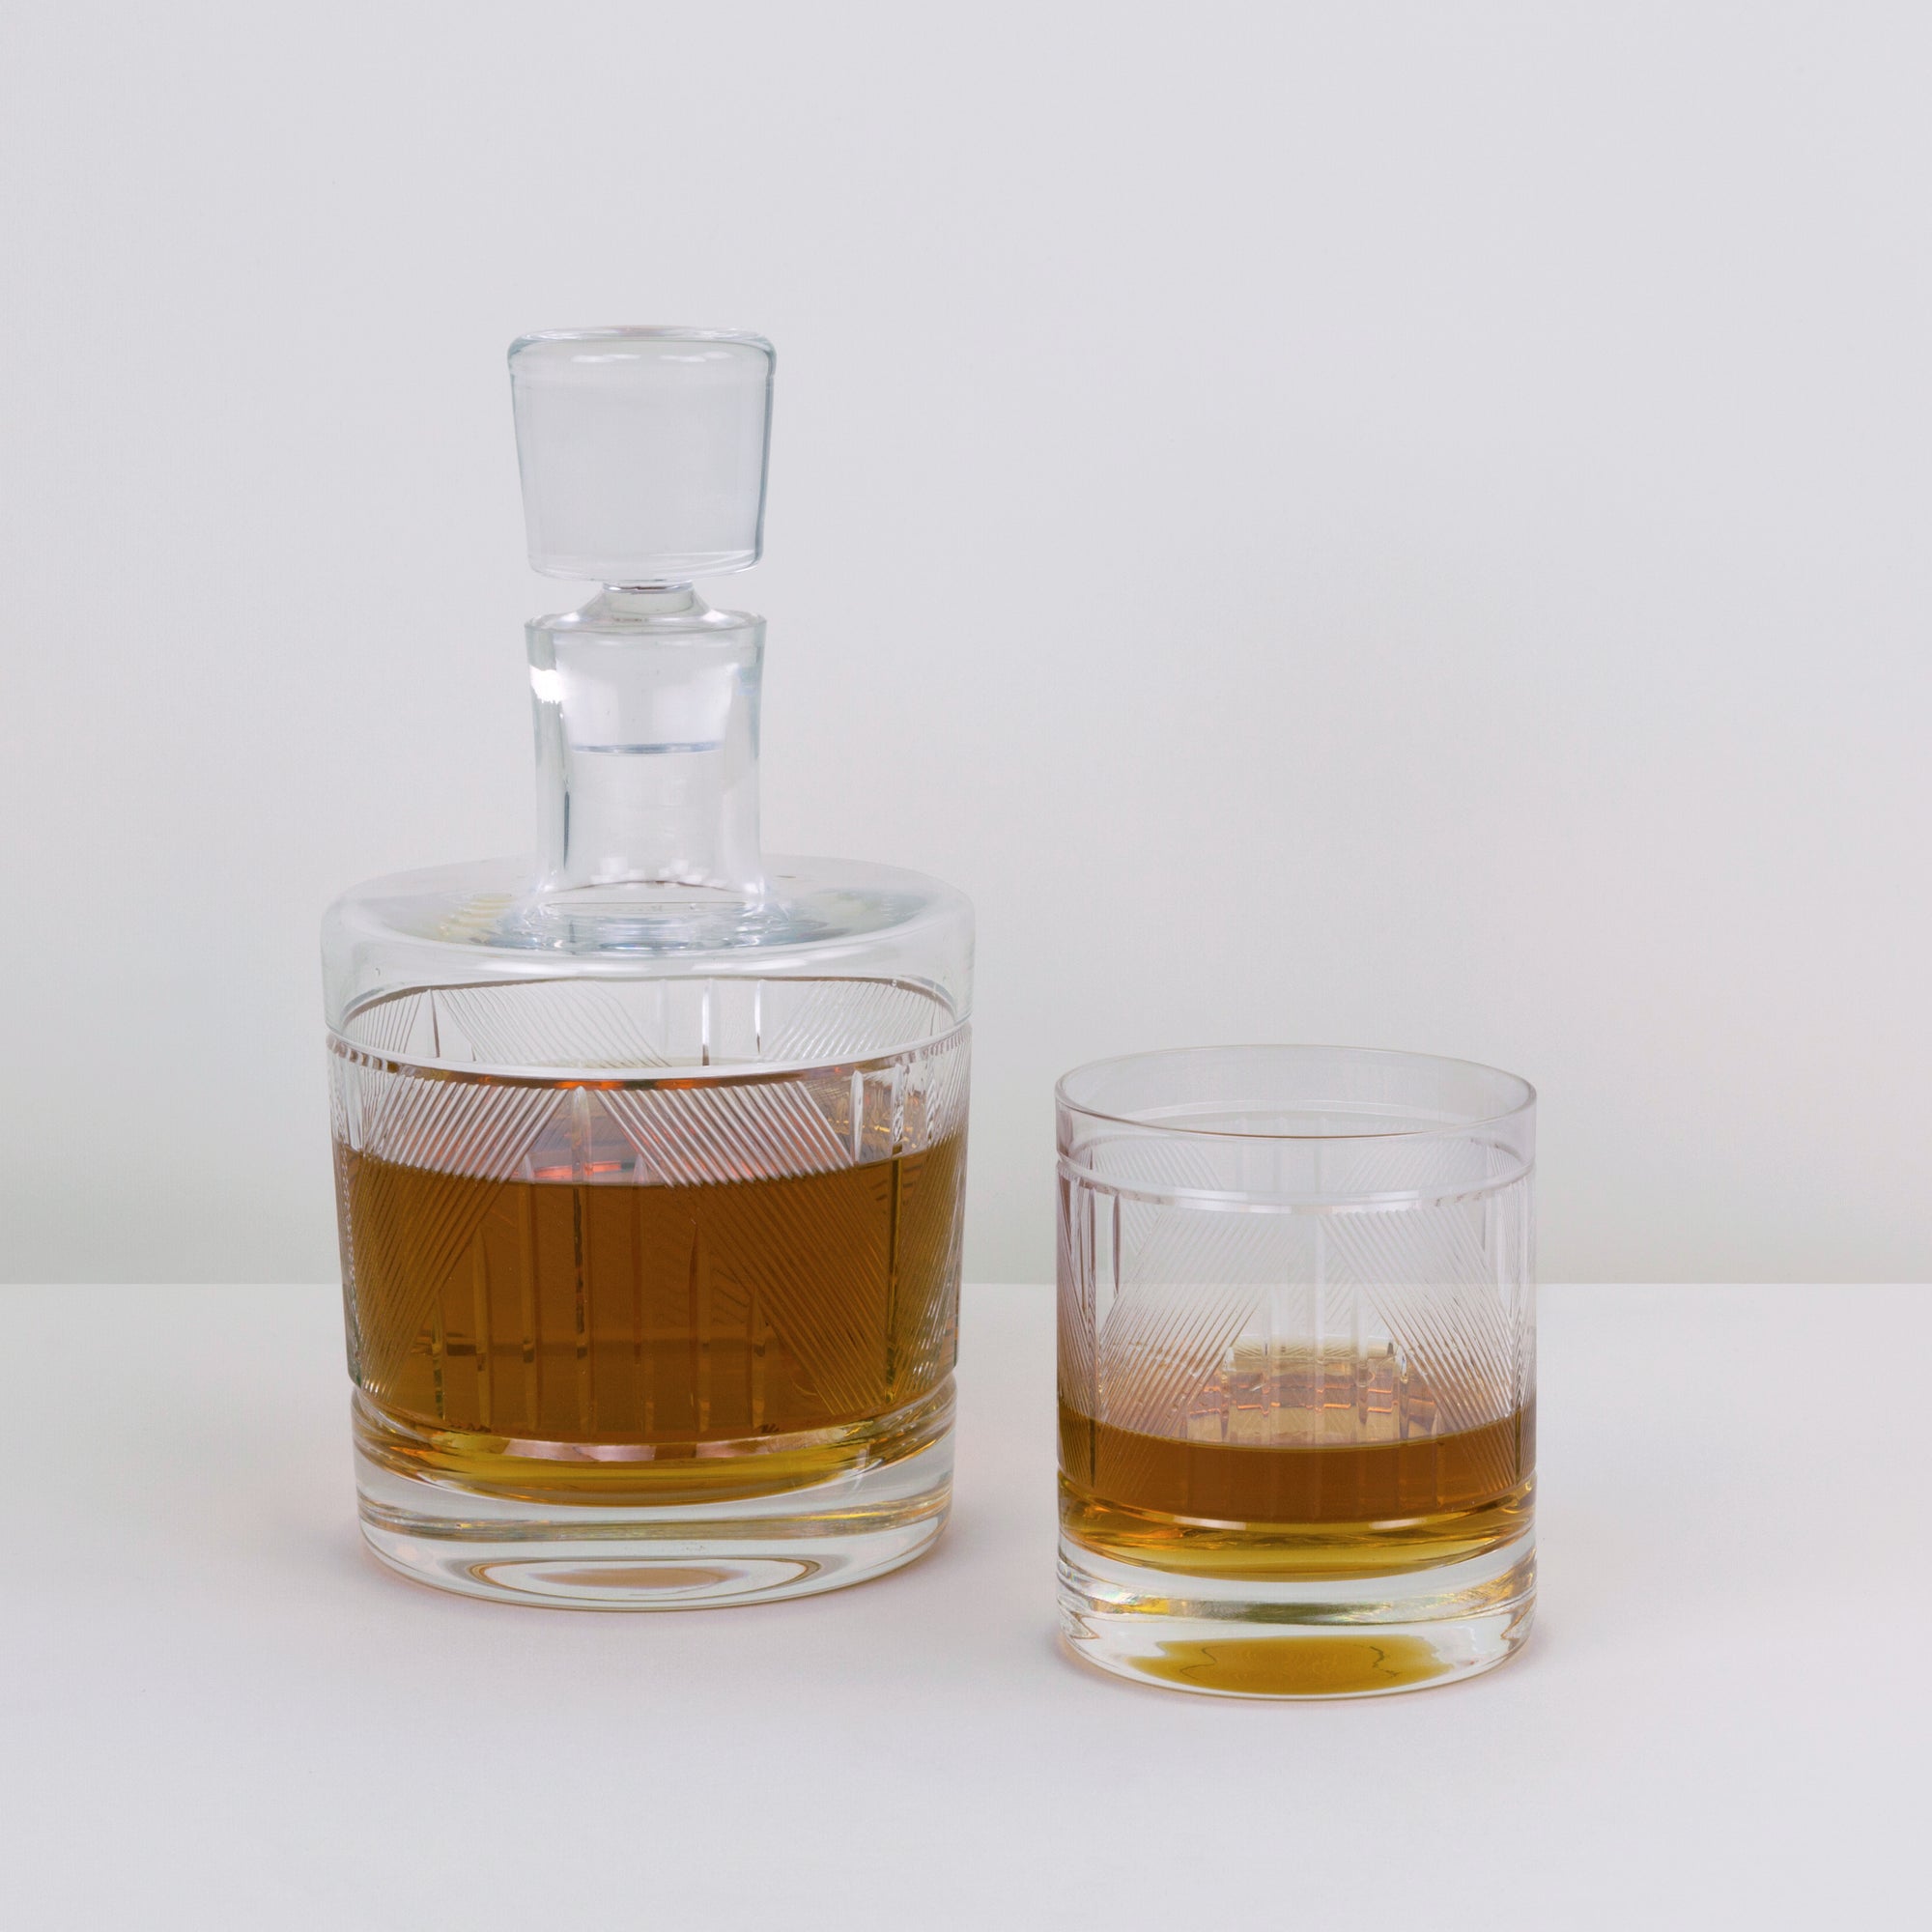 The Speakeasy Whiskey Decanter